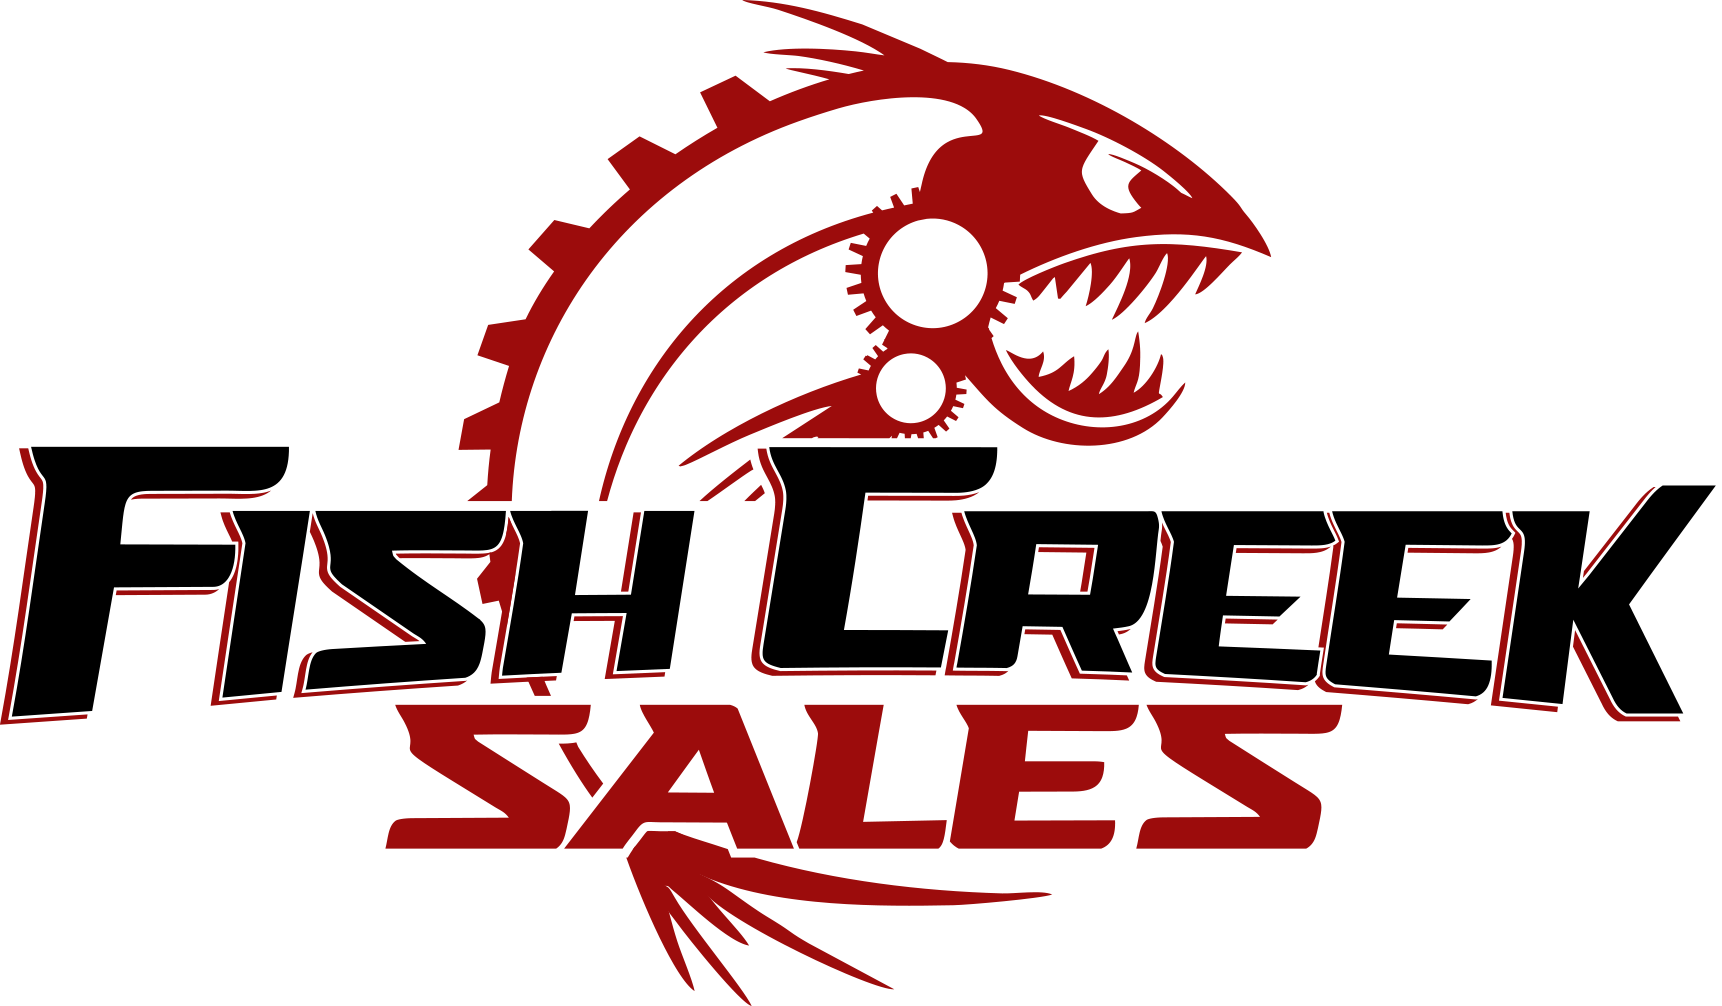 Fish Creek Sales logo